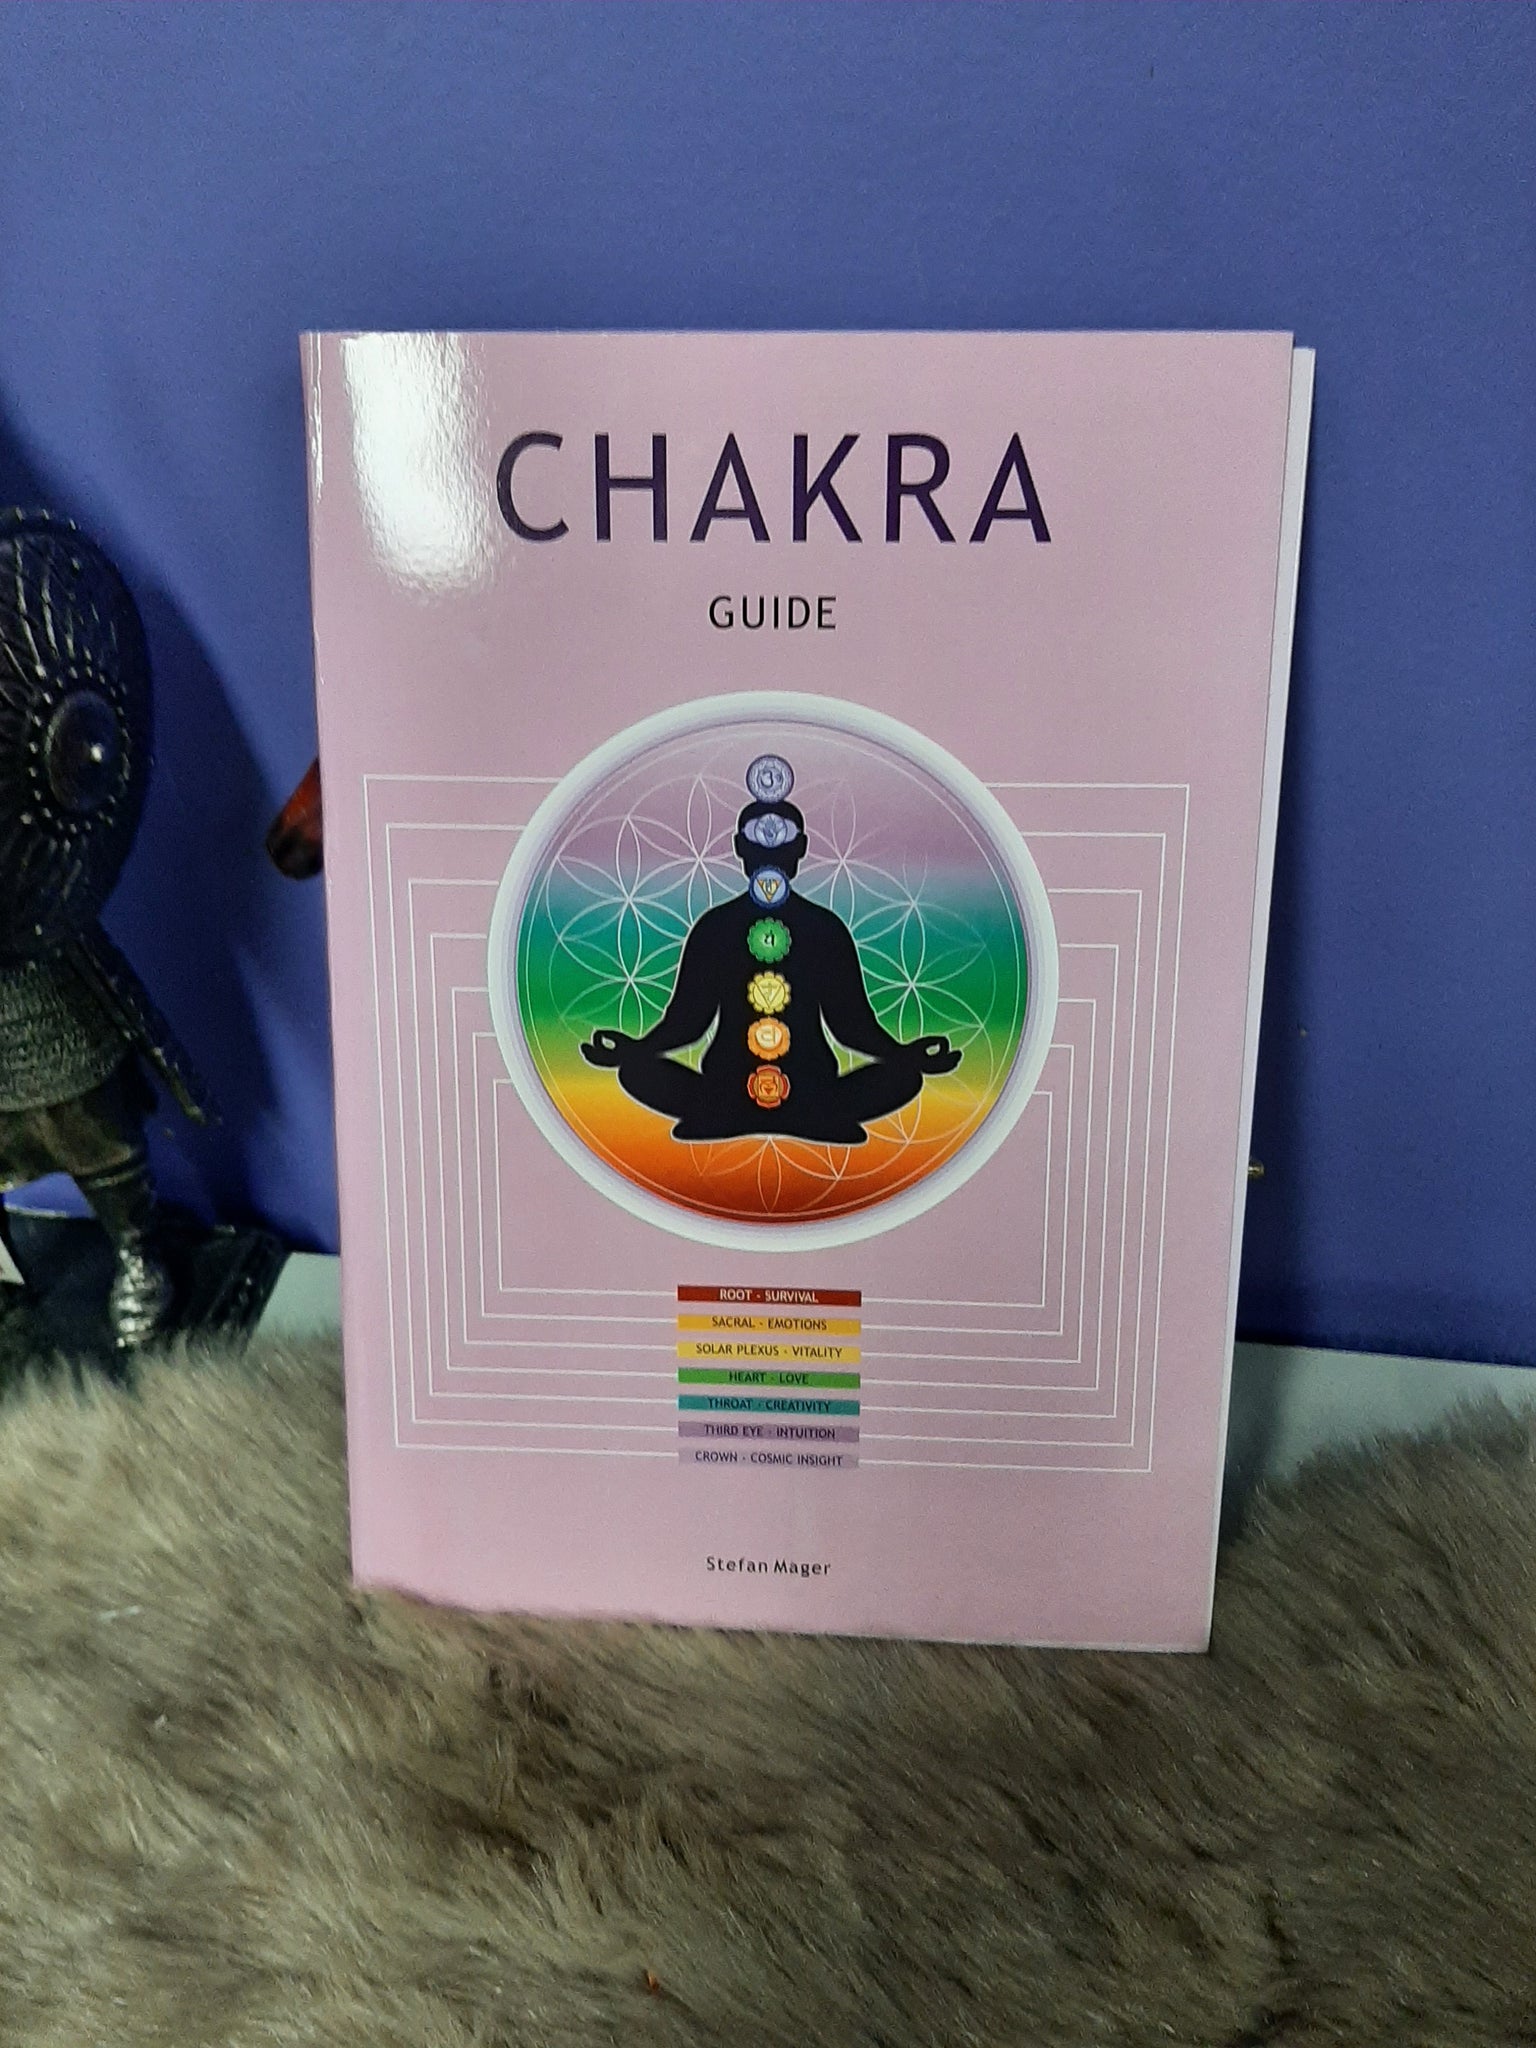 Chakra Guide